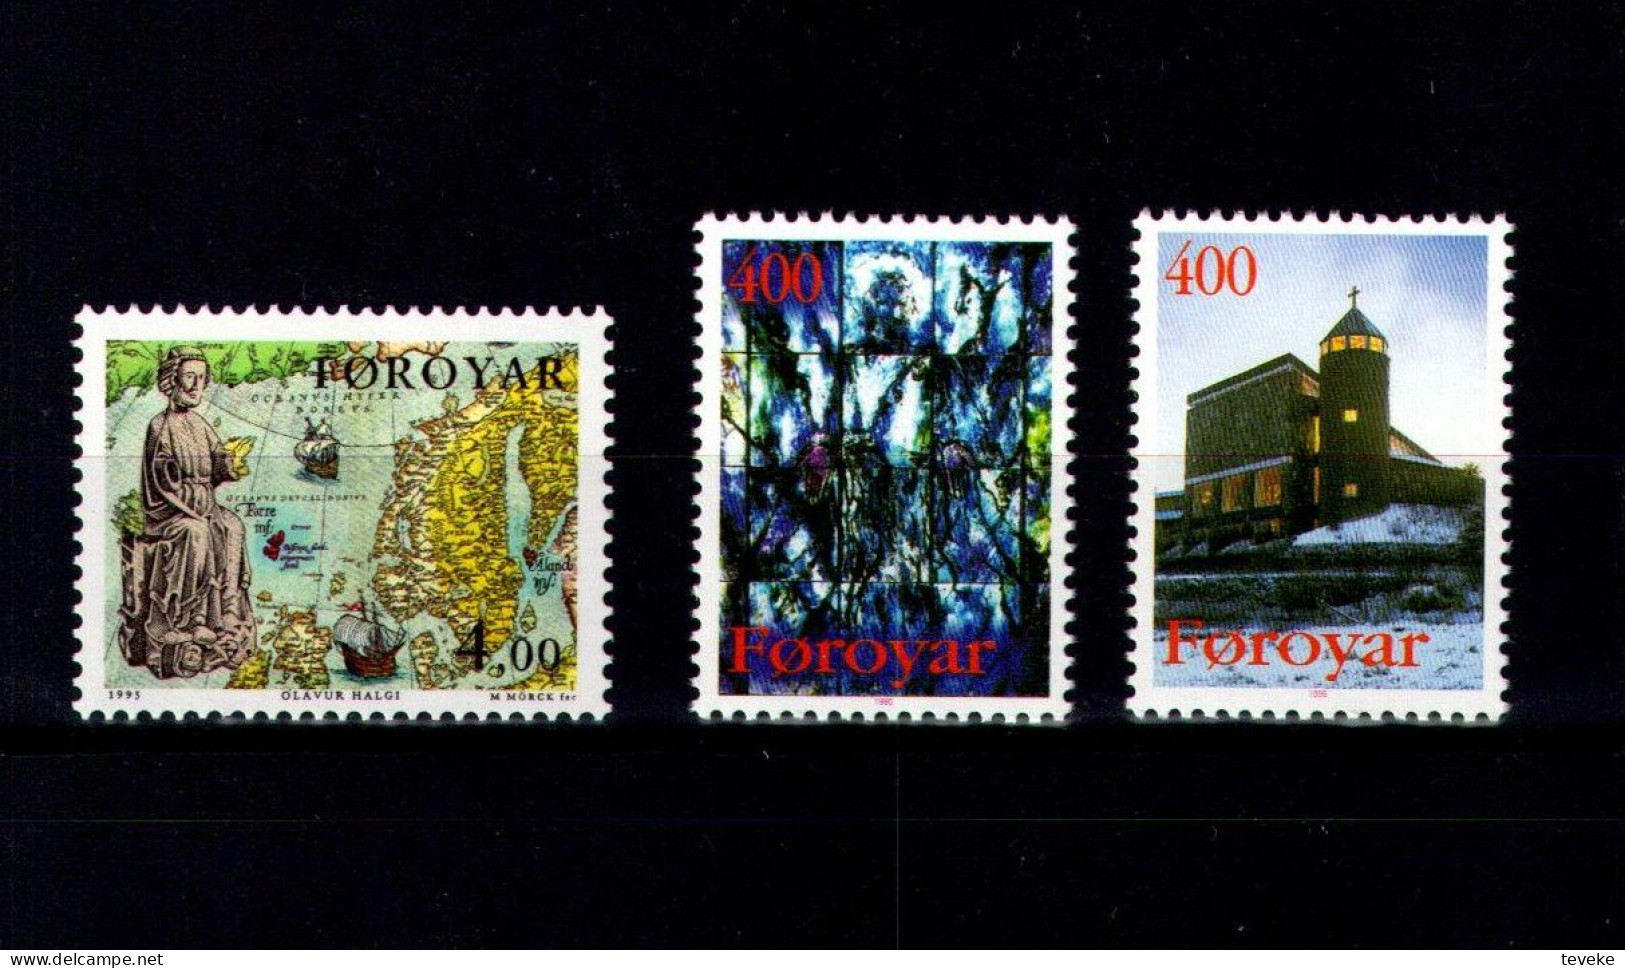 FAEROËR 1995 - MiNr. 272/290 - **/MNH - YEARSET - Faroe Islands